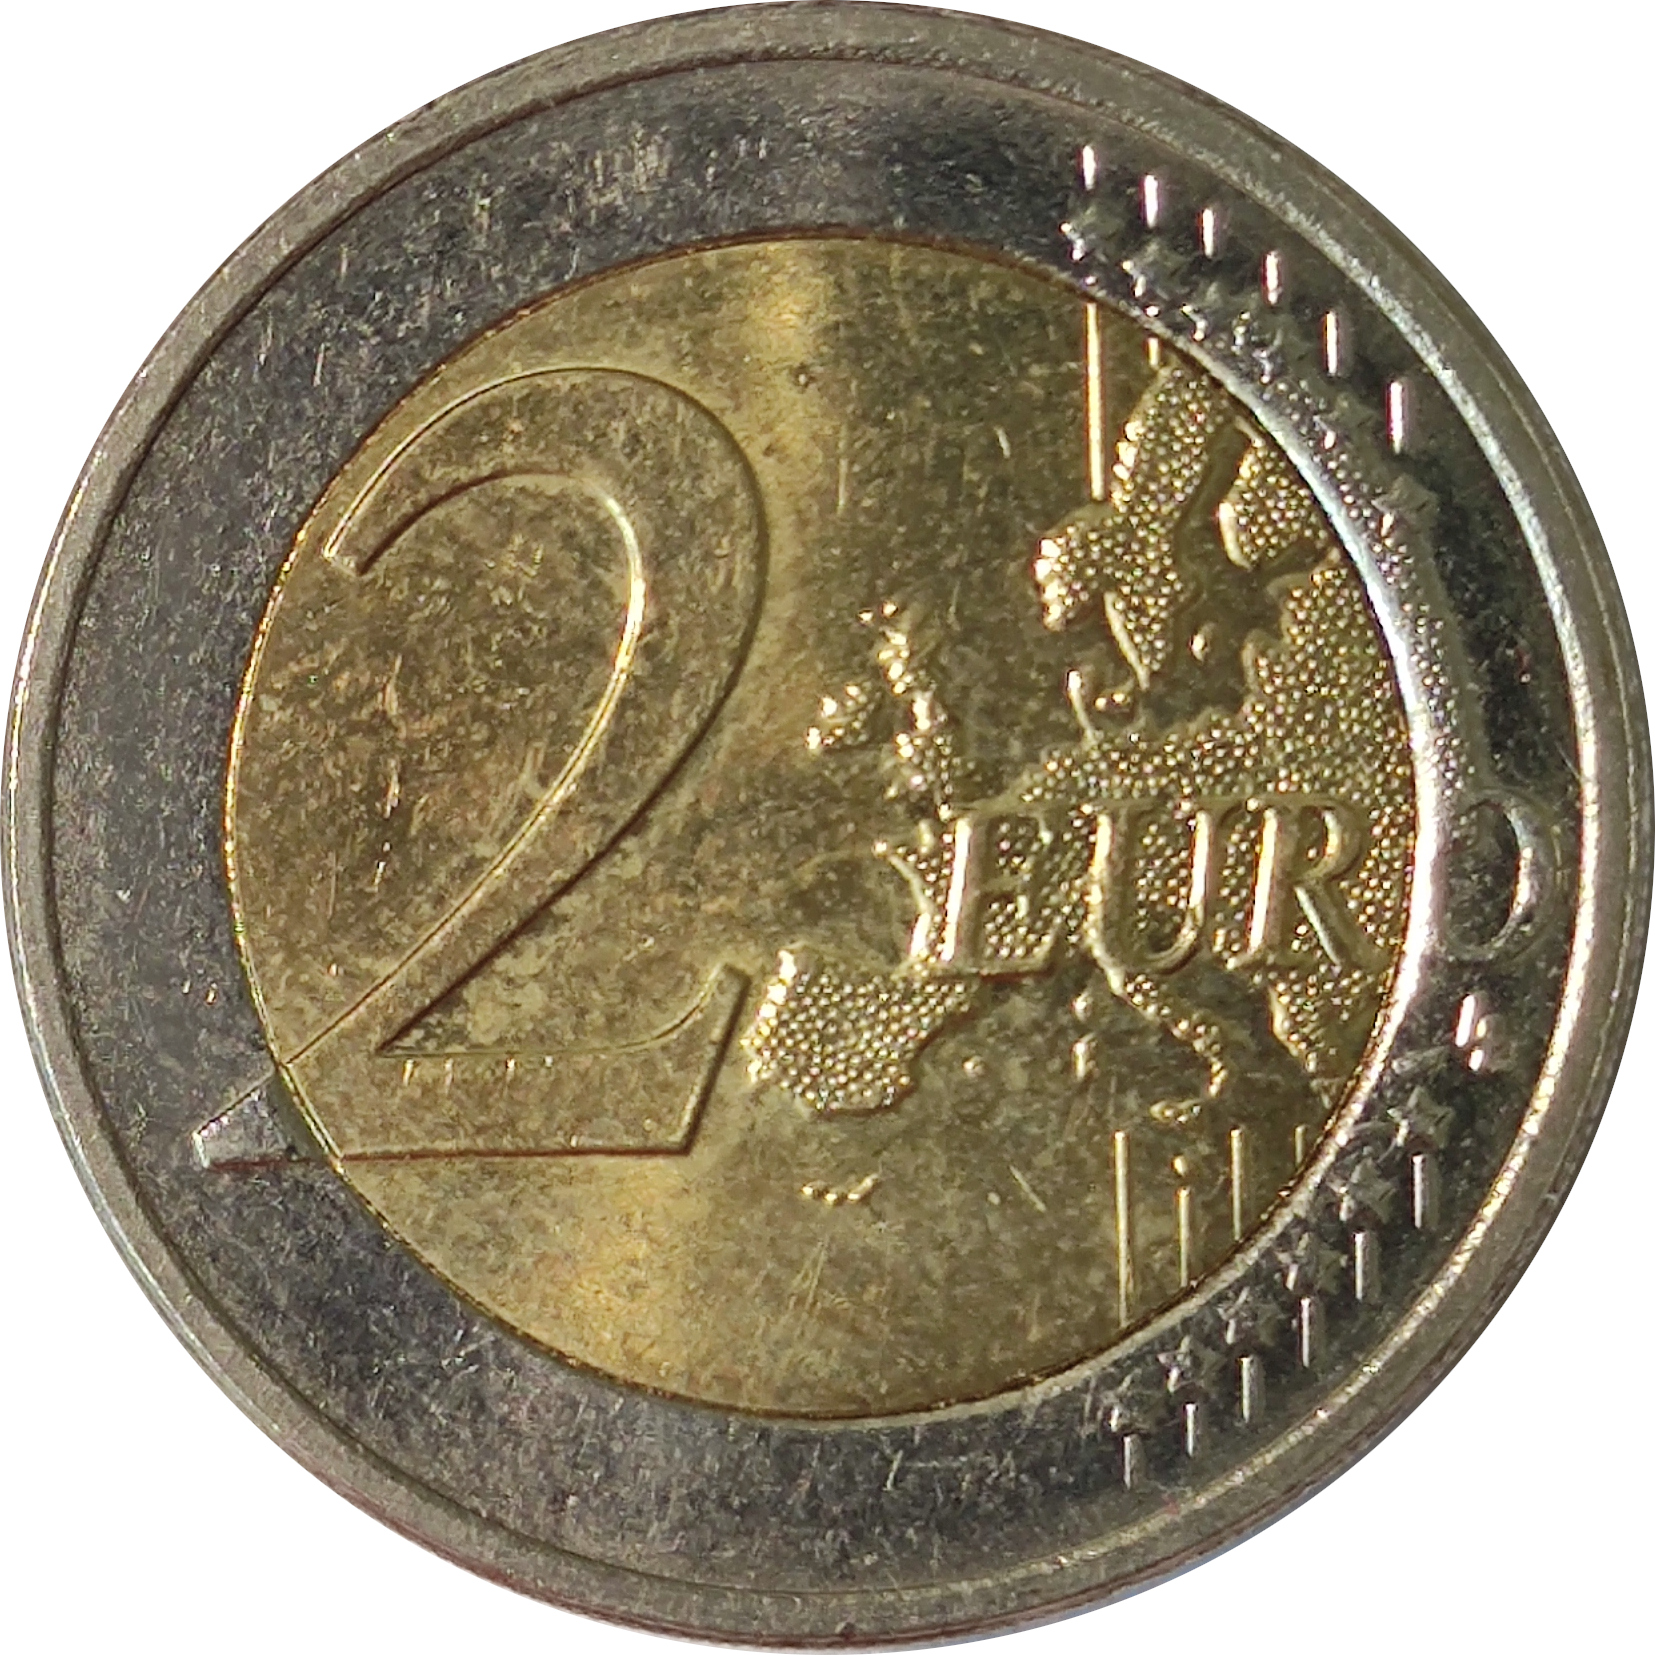 2 euro - Grand-Duc Henri